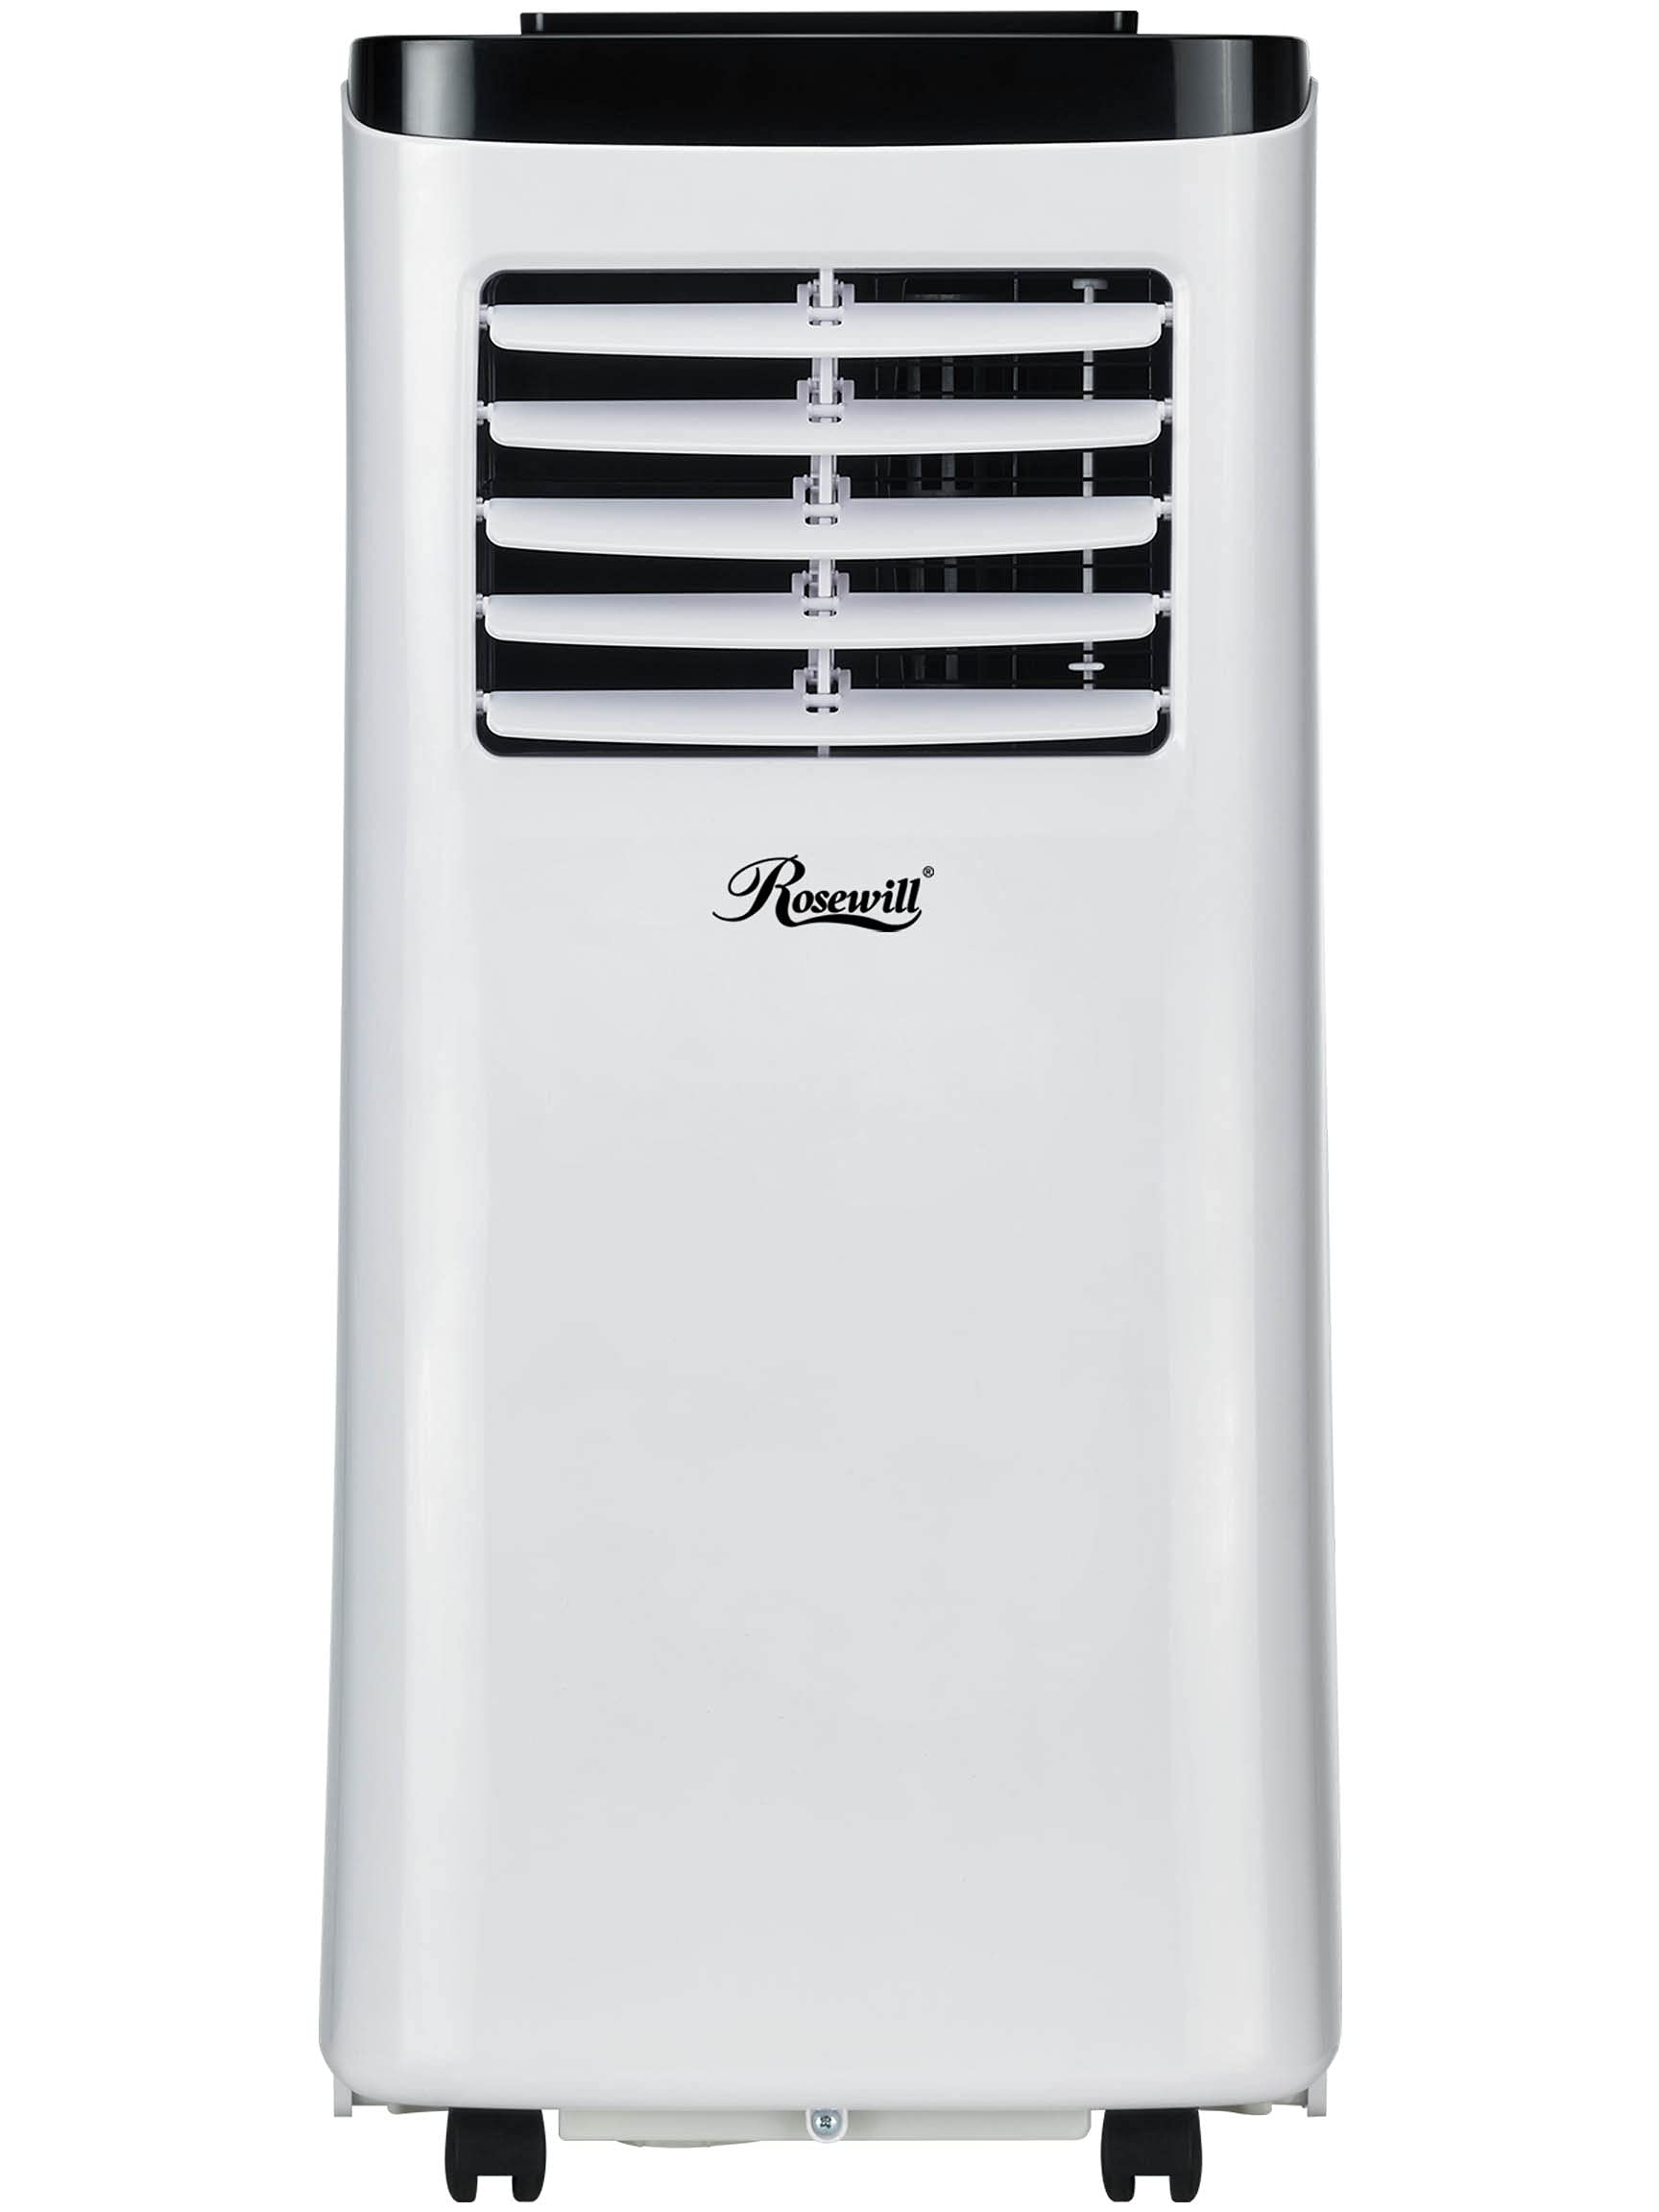 Rosewill Portable Air Conditioner 7000 BTU, AC Fan & Dehumidifier 3-in-1 Cool/Fan/Dehumidify w/Remote Control, Quiet Energy Efficient Self Evaporat...